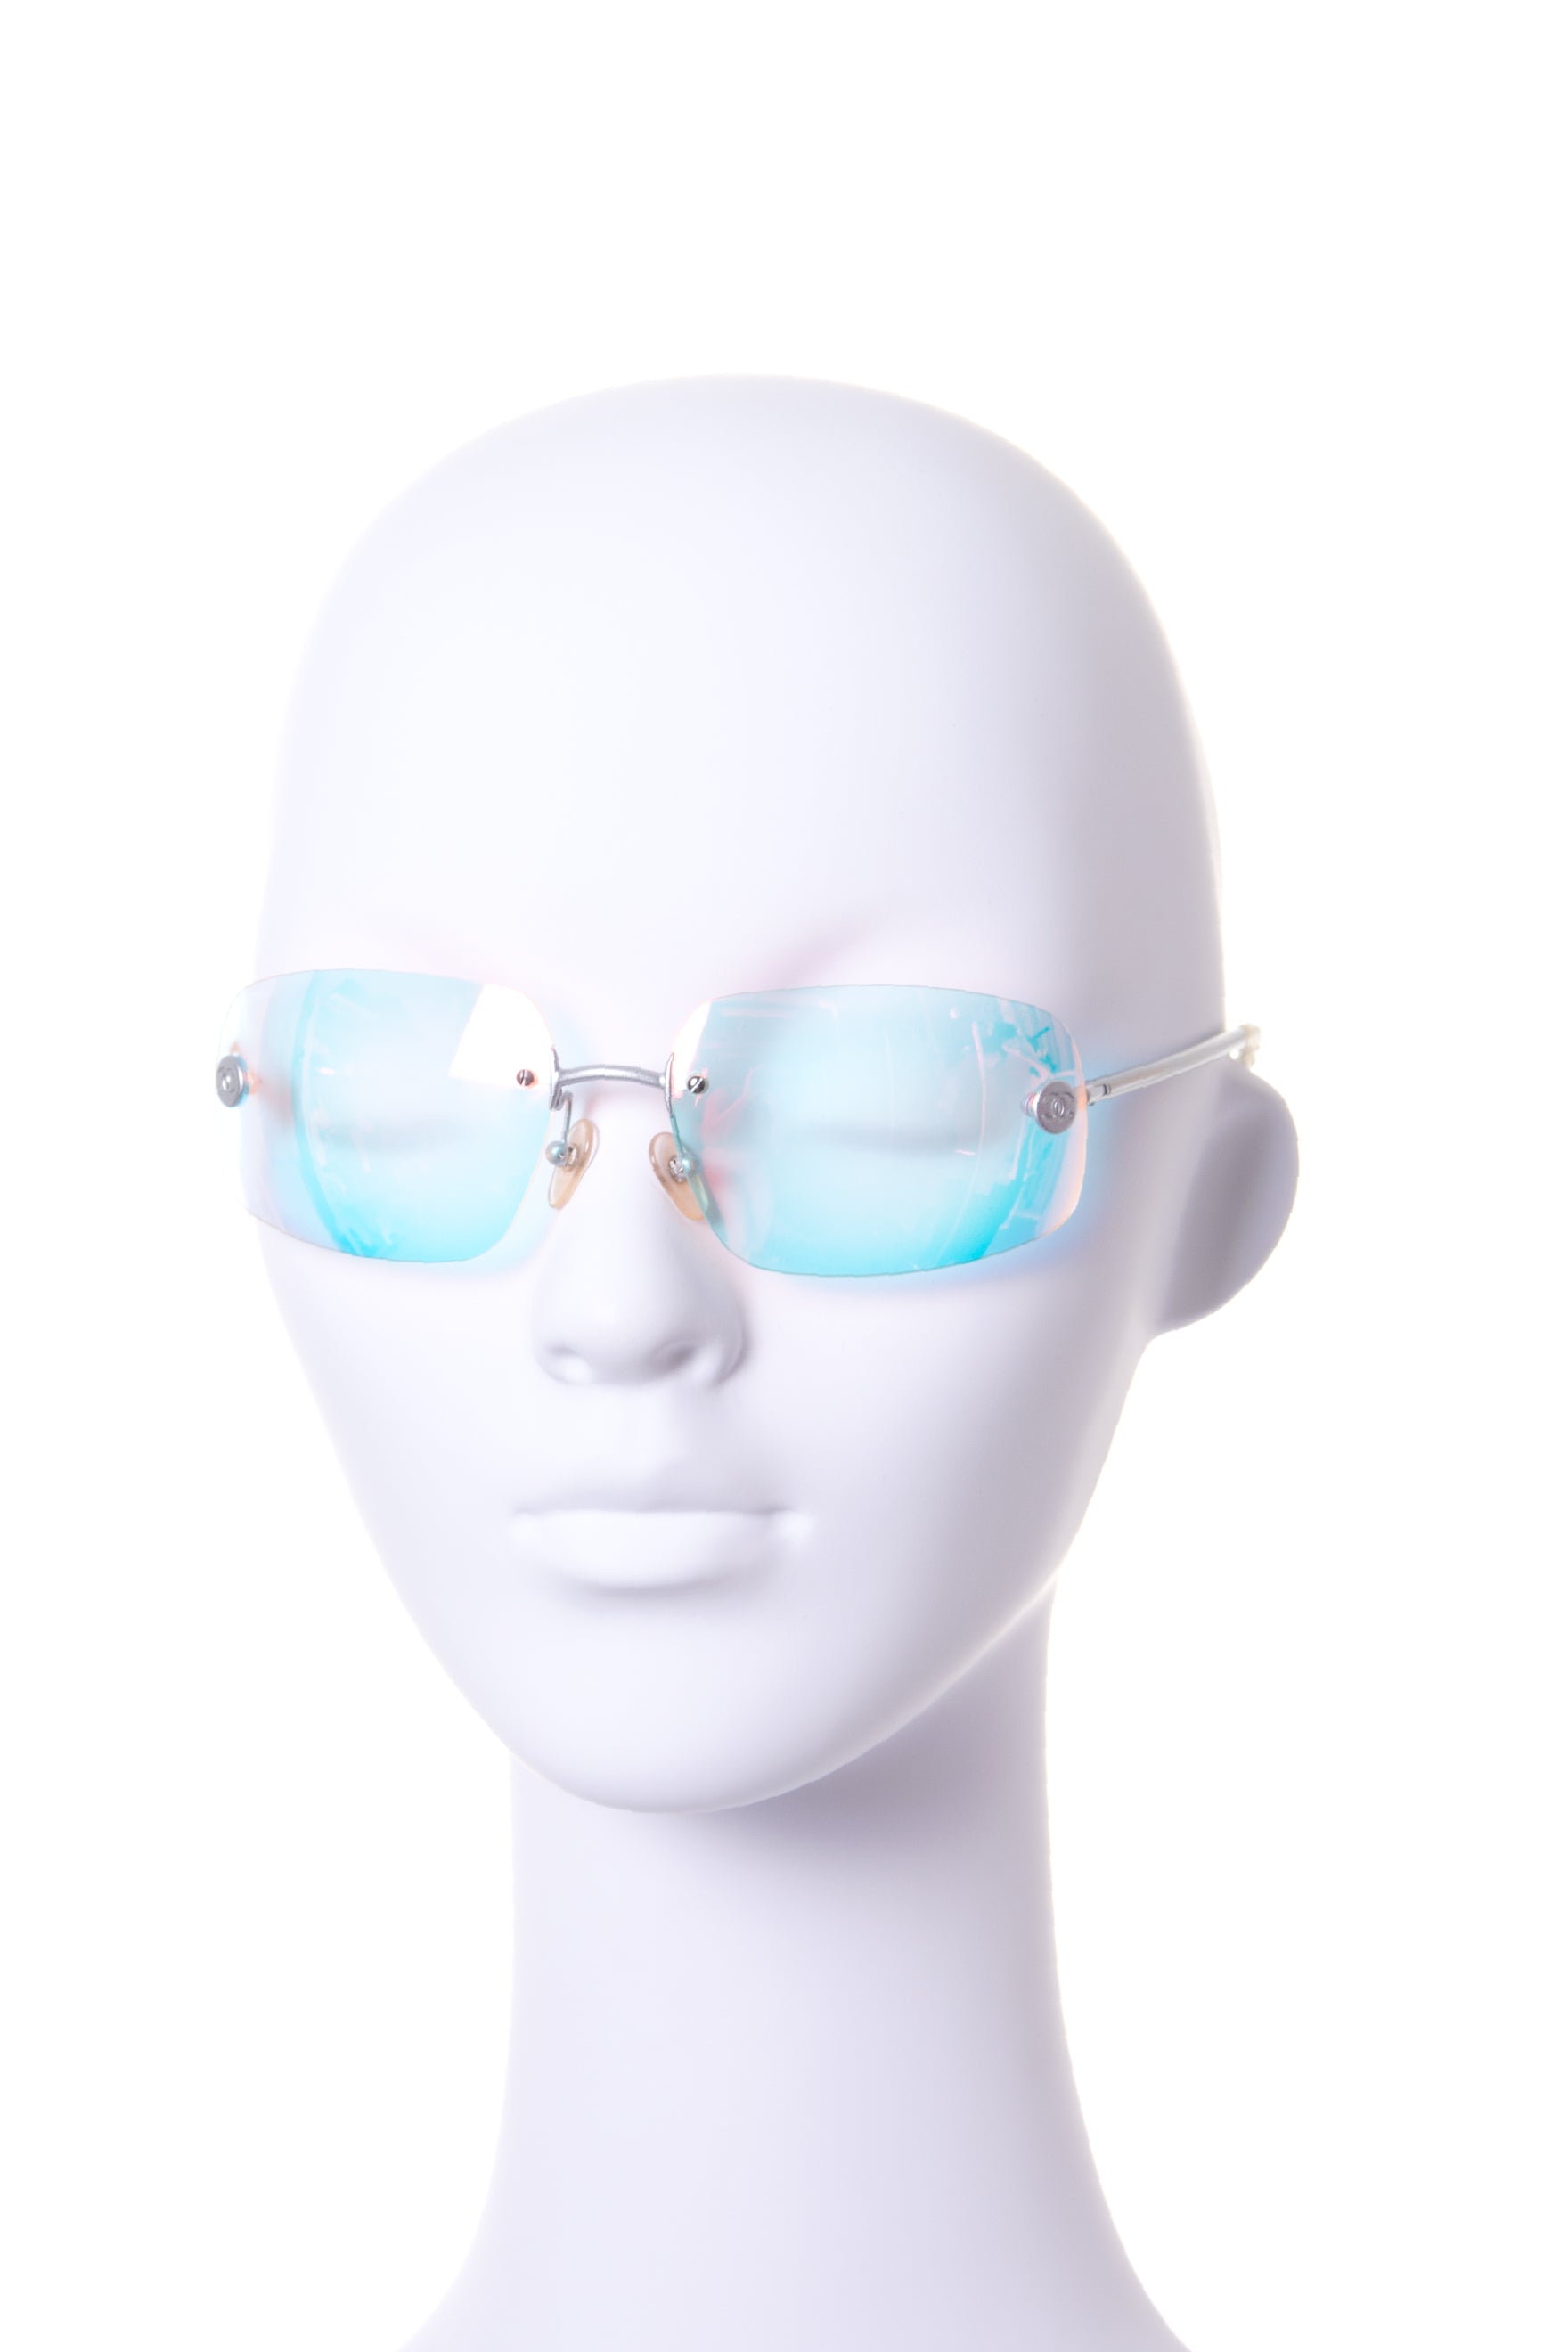 * CHANEL * - womens sunglasses - 6036 50342 Shield Lens - Studded - Blue